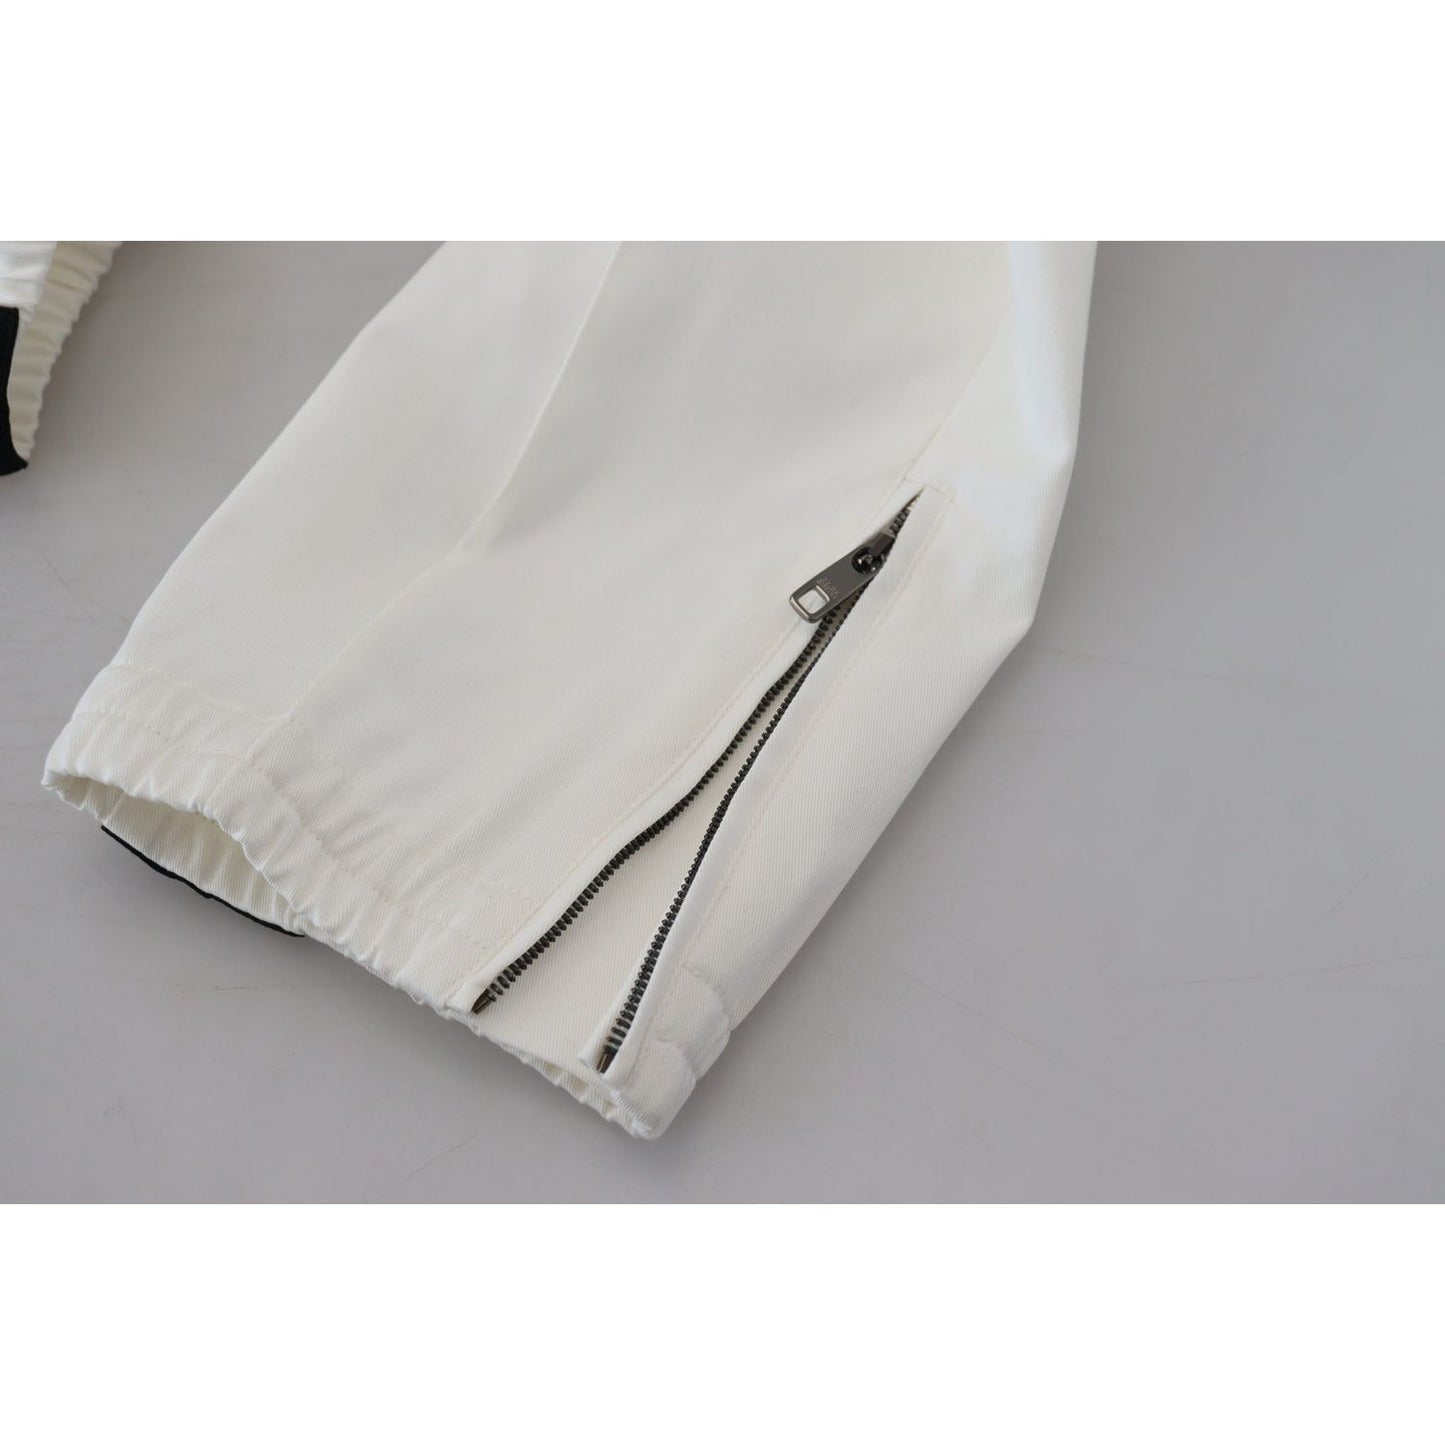 Dolce & Gabbana Elegant White Cotton Jogger Pants white-cotton-dg-logo-jogger-pants